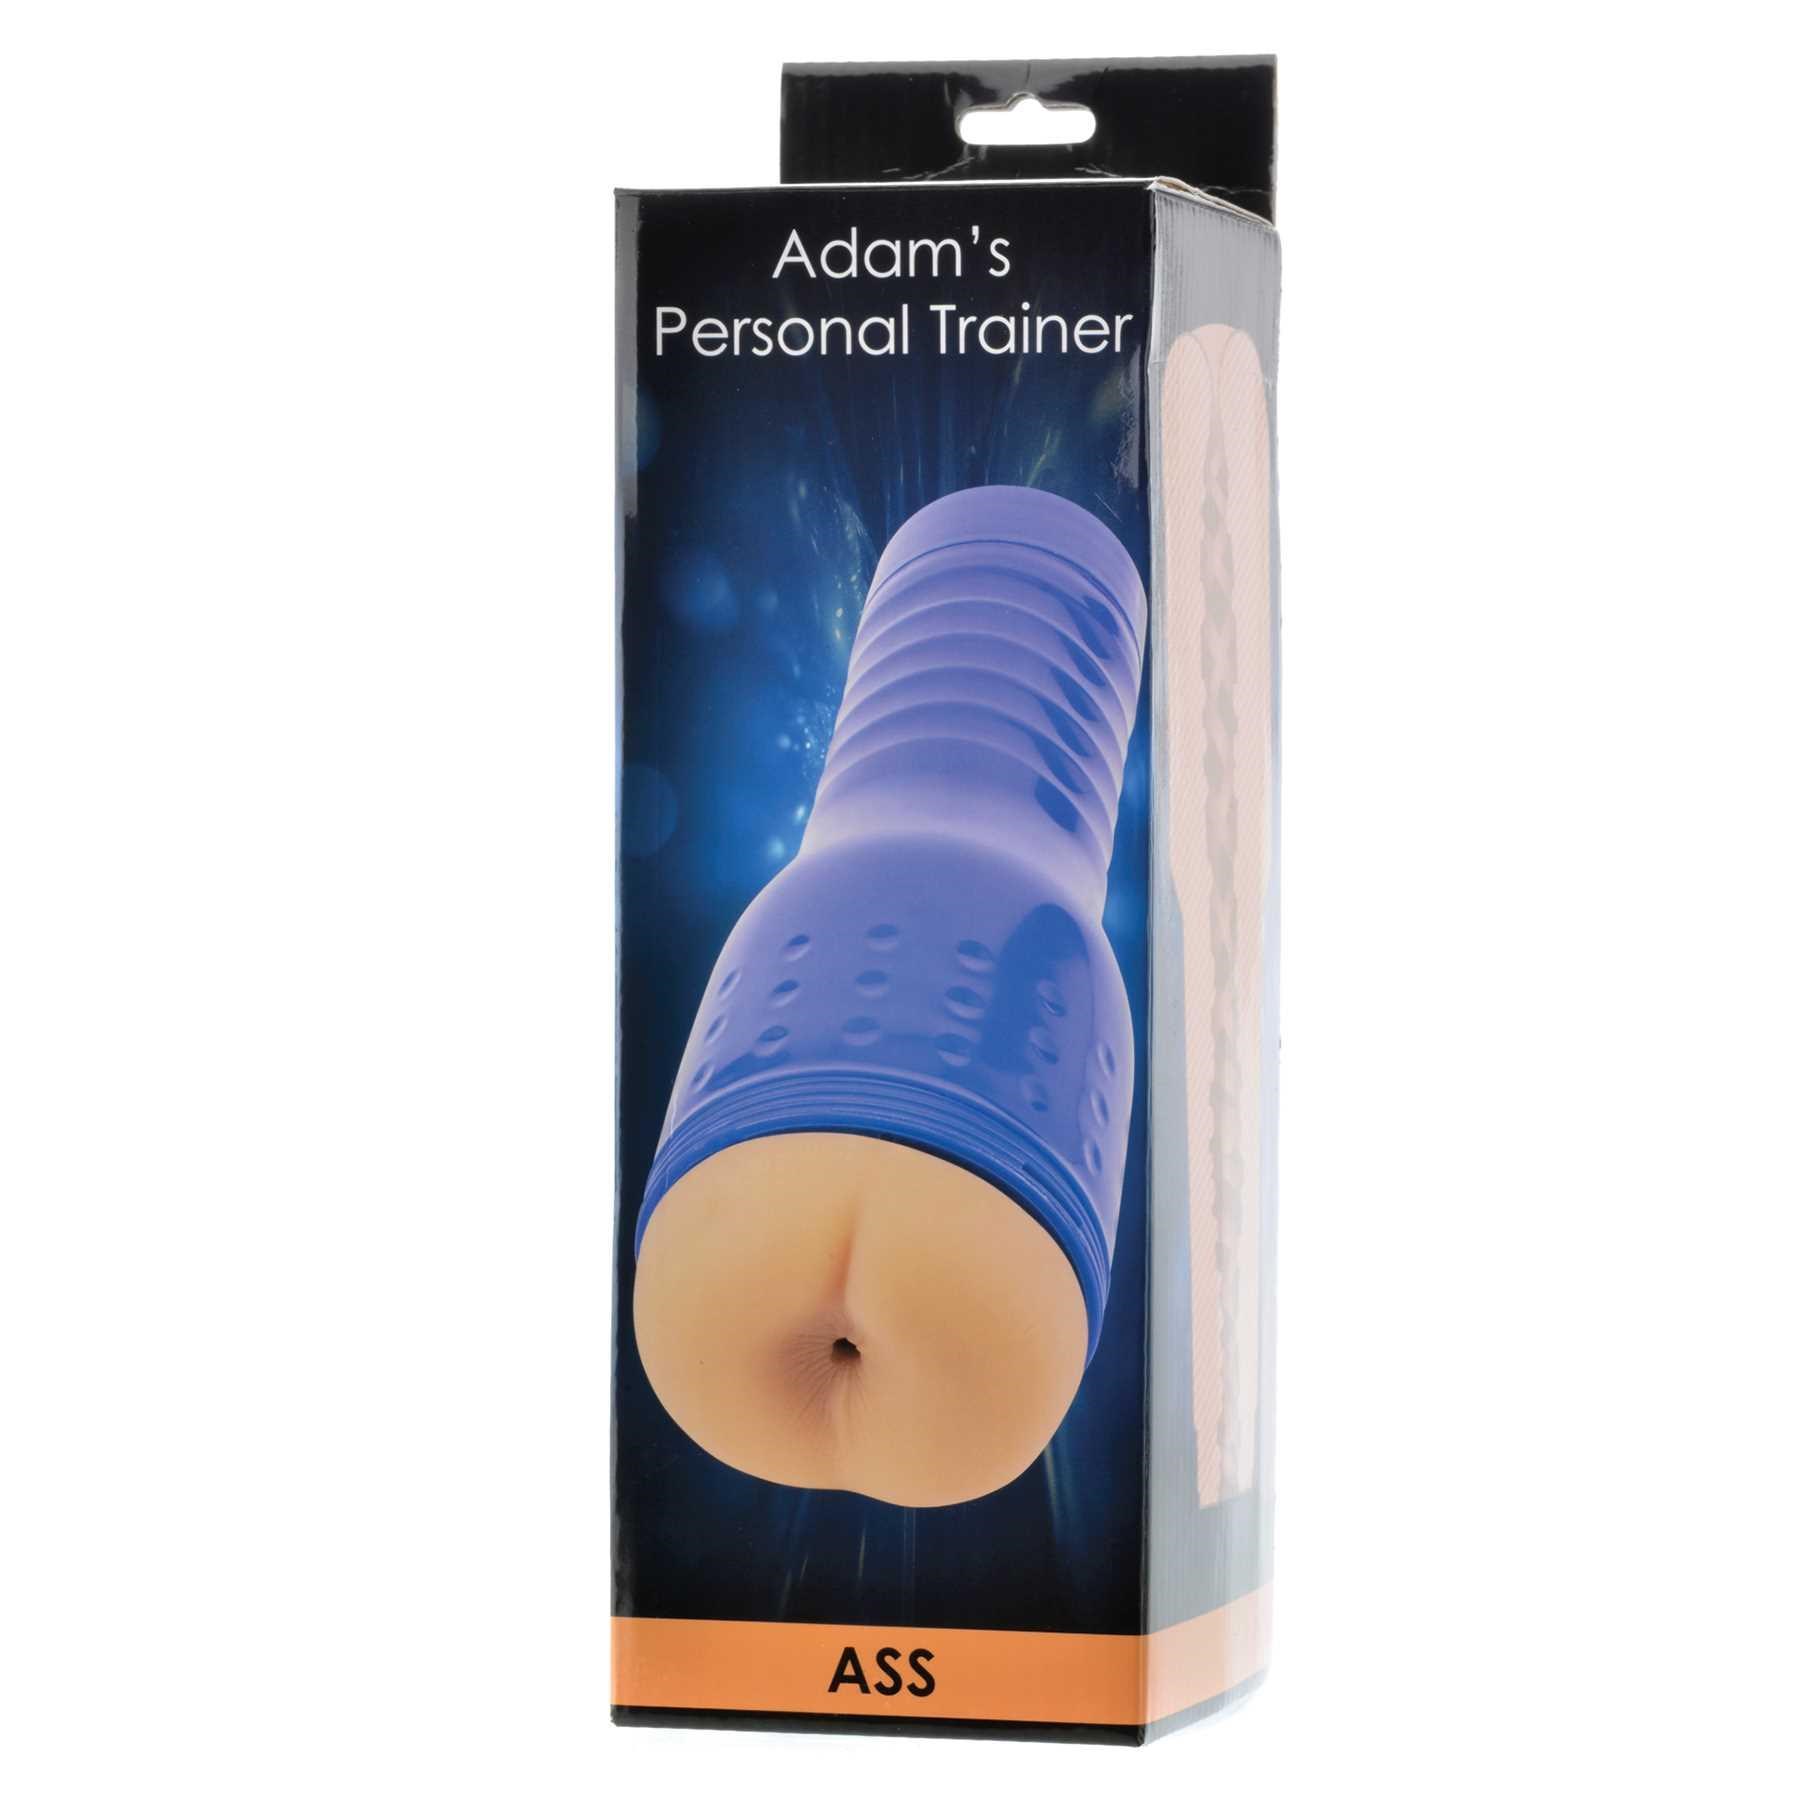 Adam's Personal Trainer - Ass male masturbator packaging